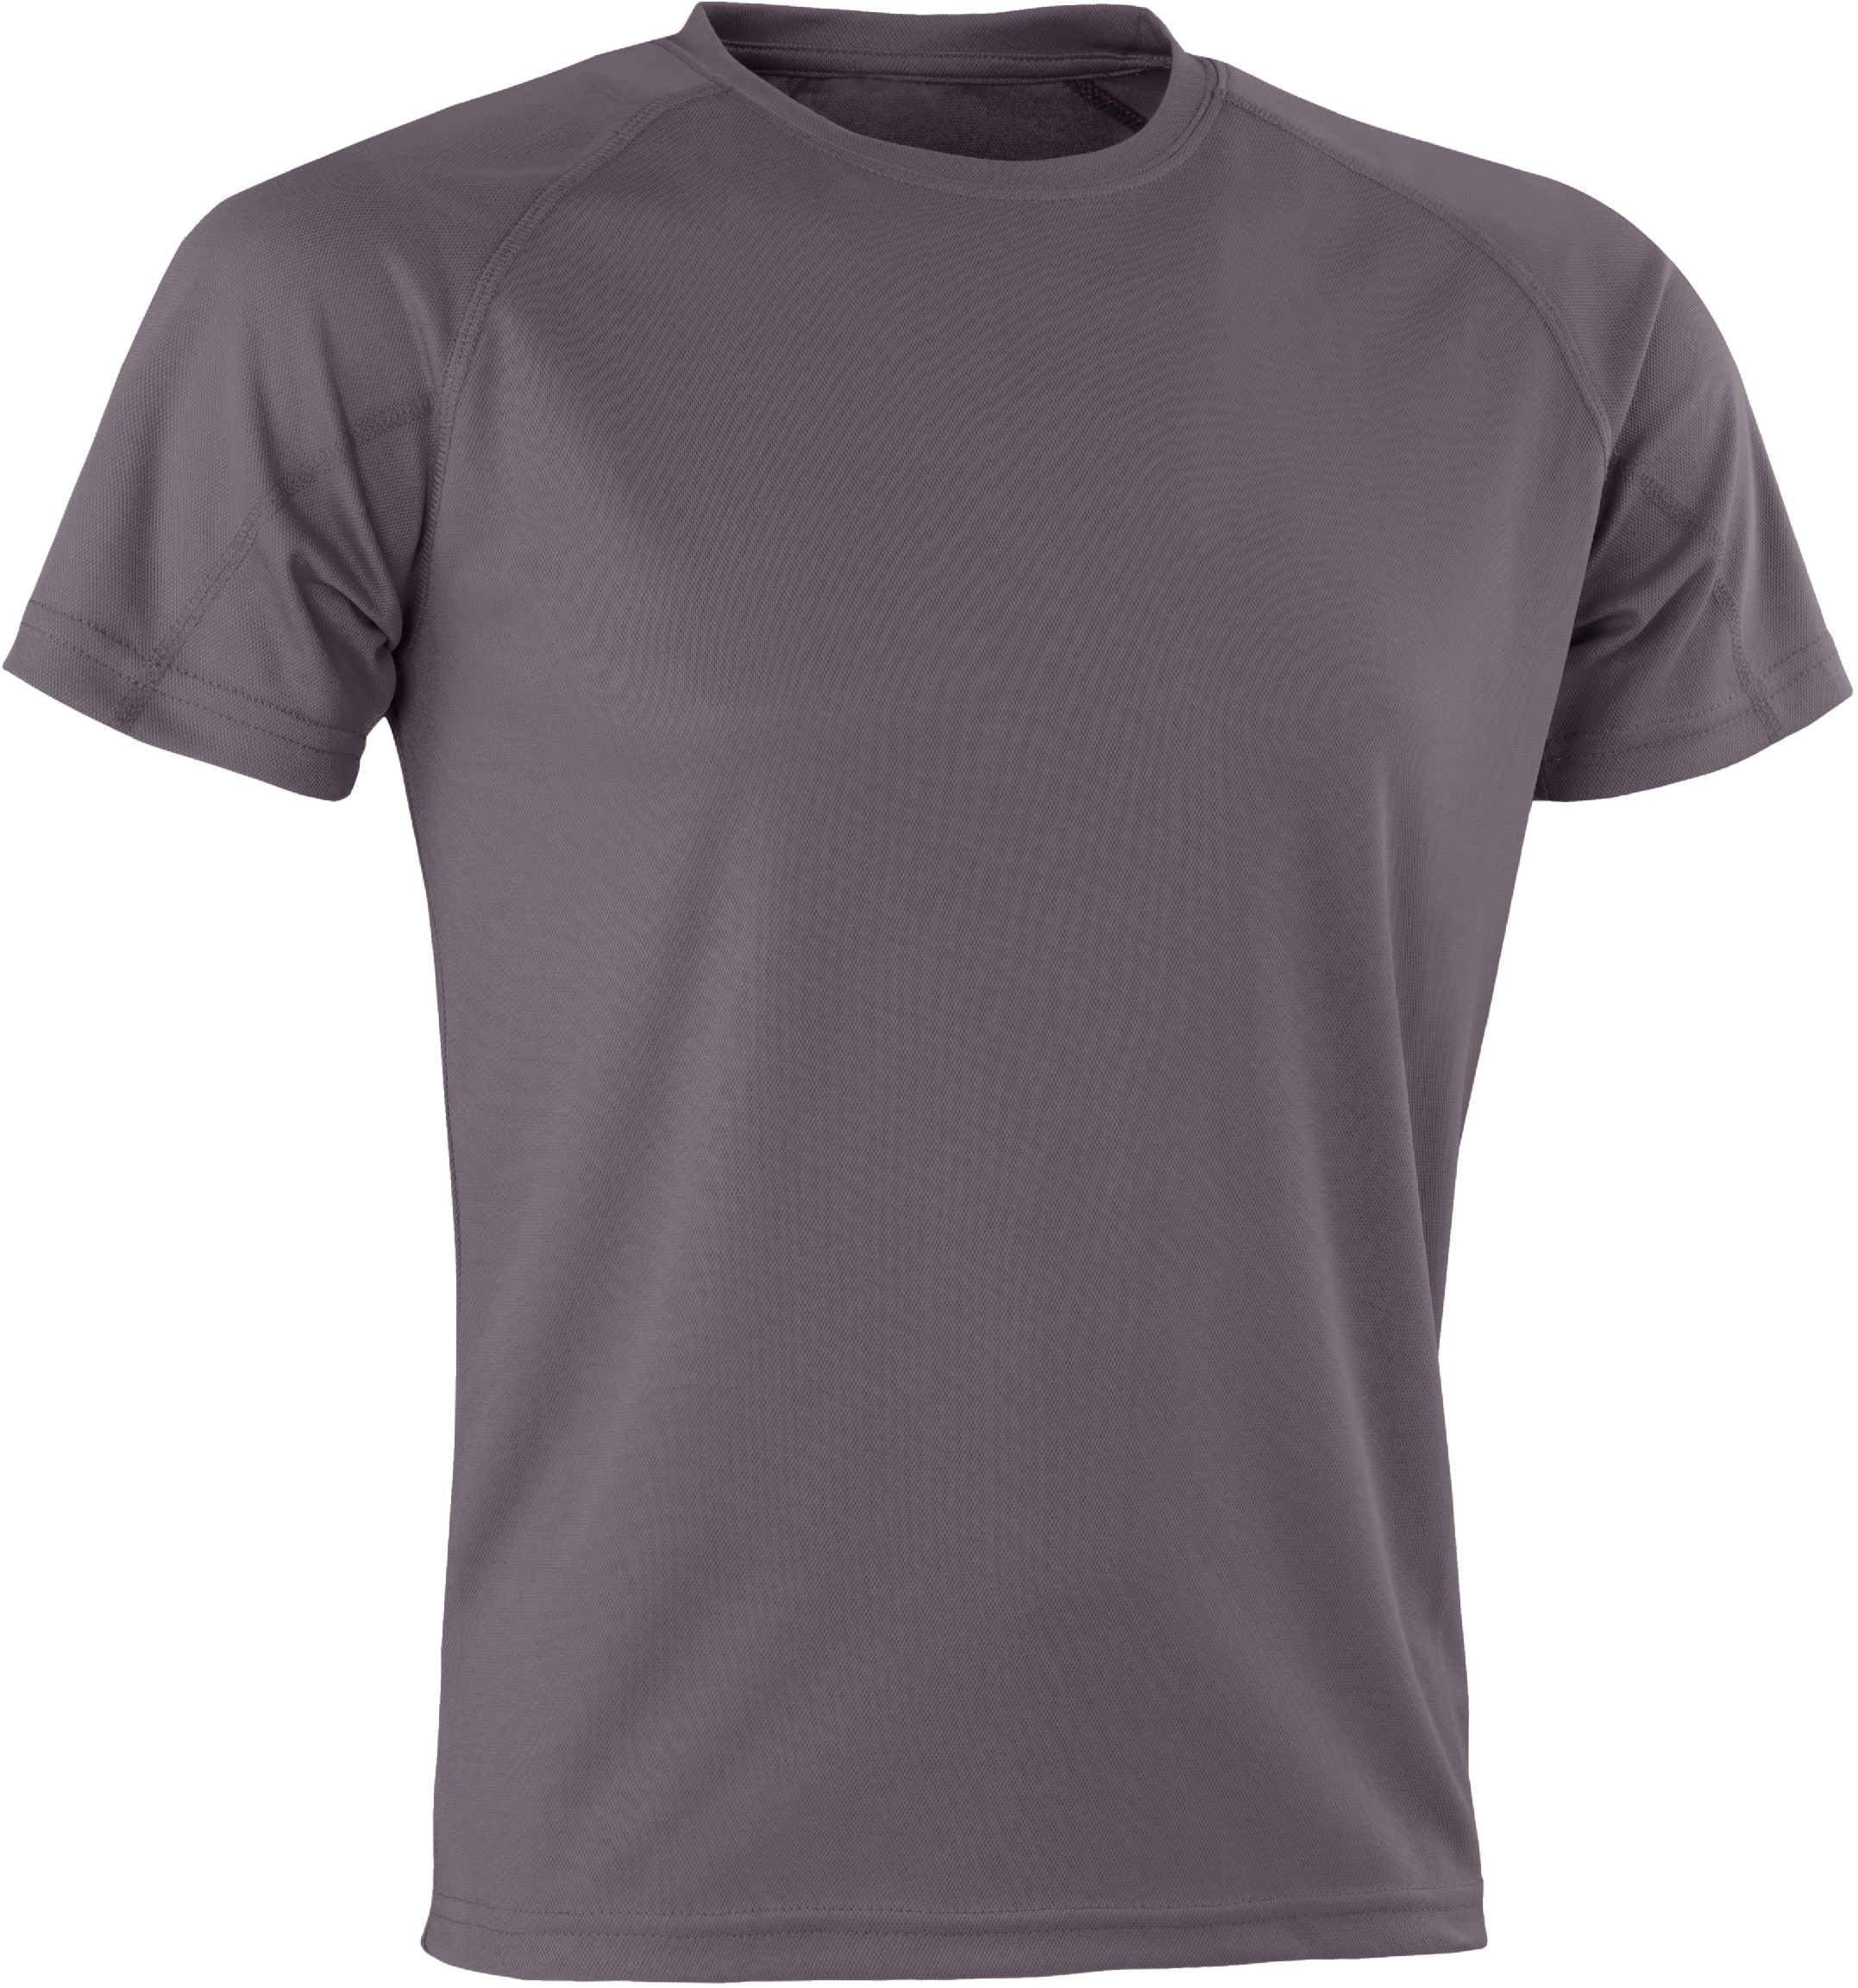 Sportovní tričko Aircool S287X Barva: šedá, Velikost: S